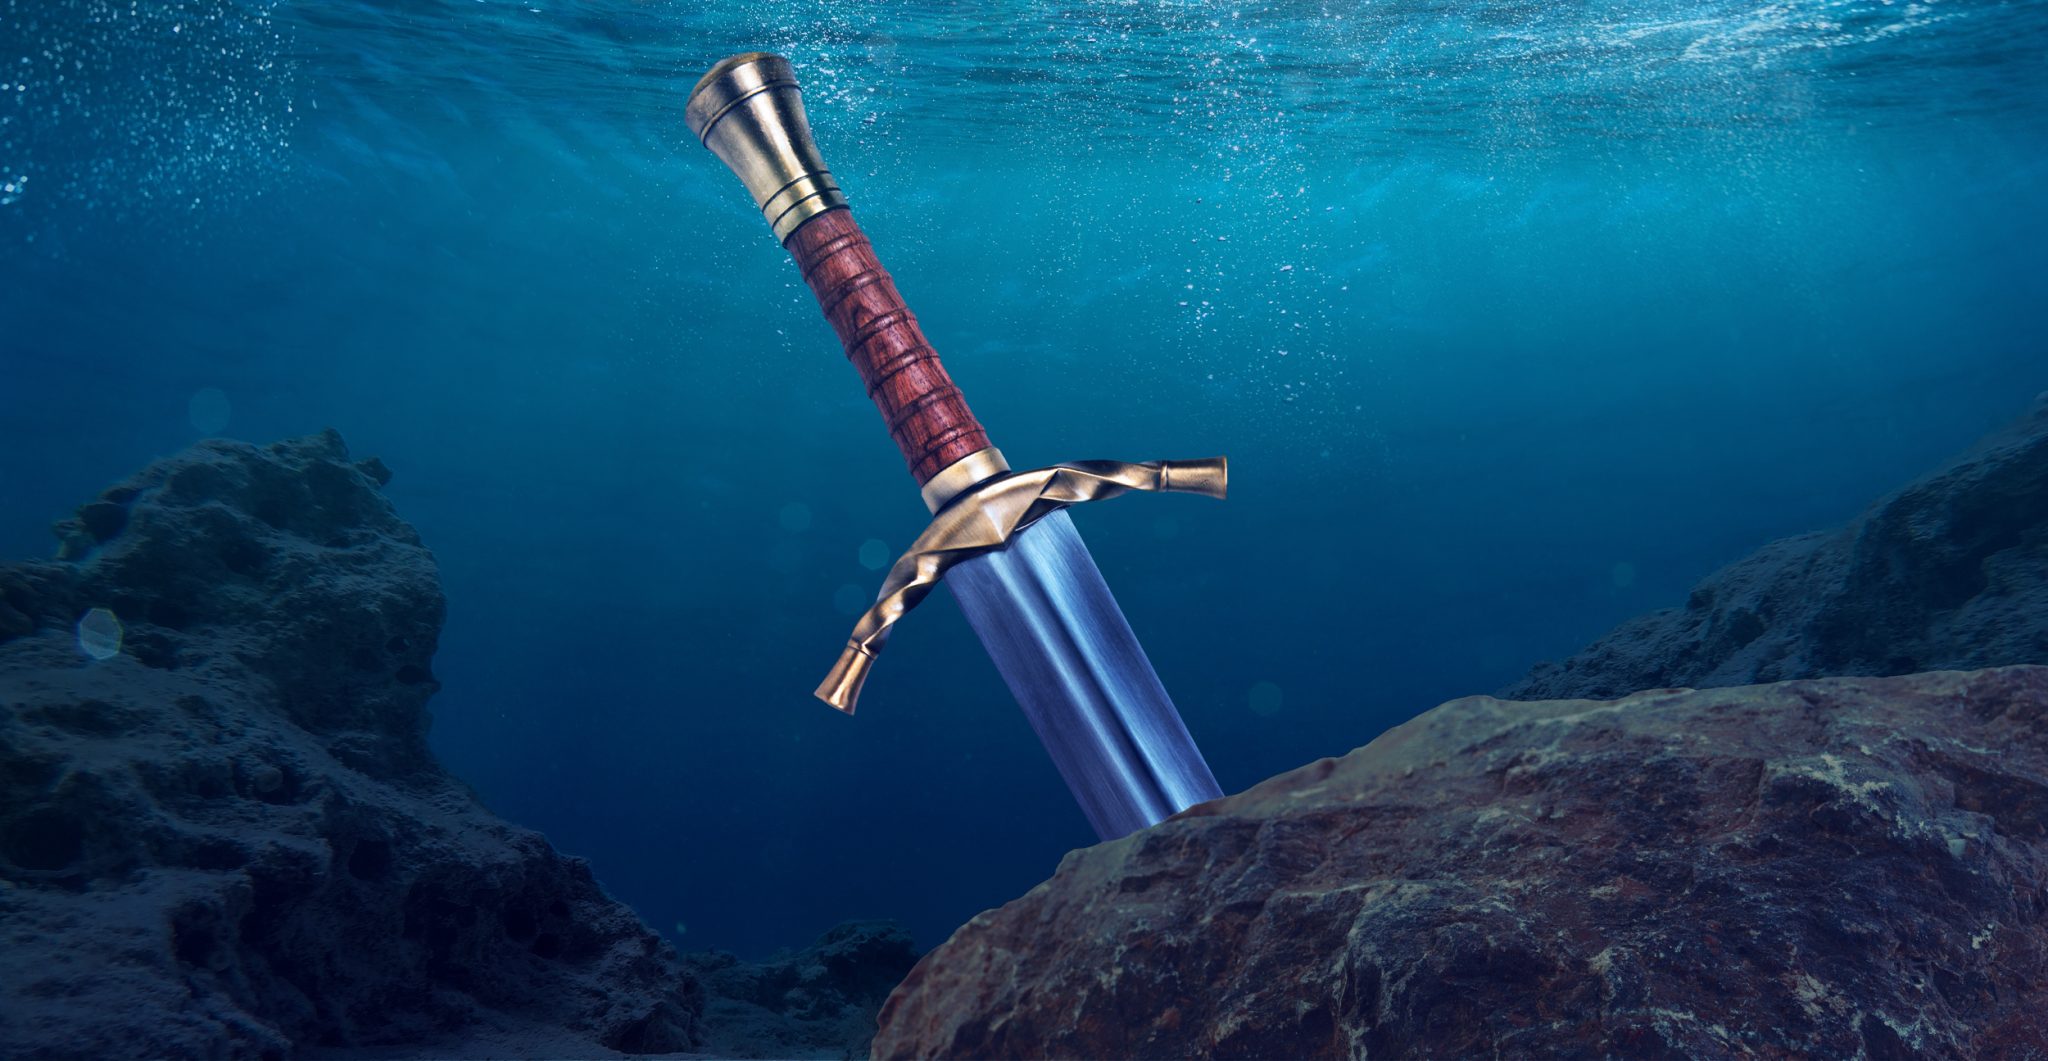 Sword in the underwater stone